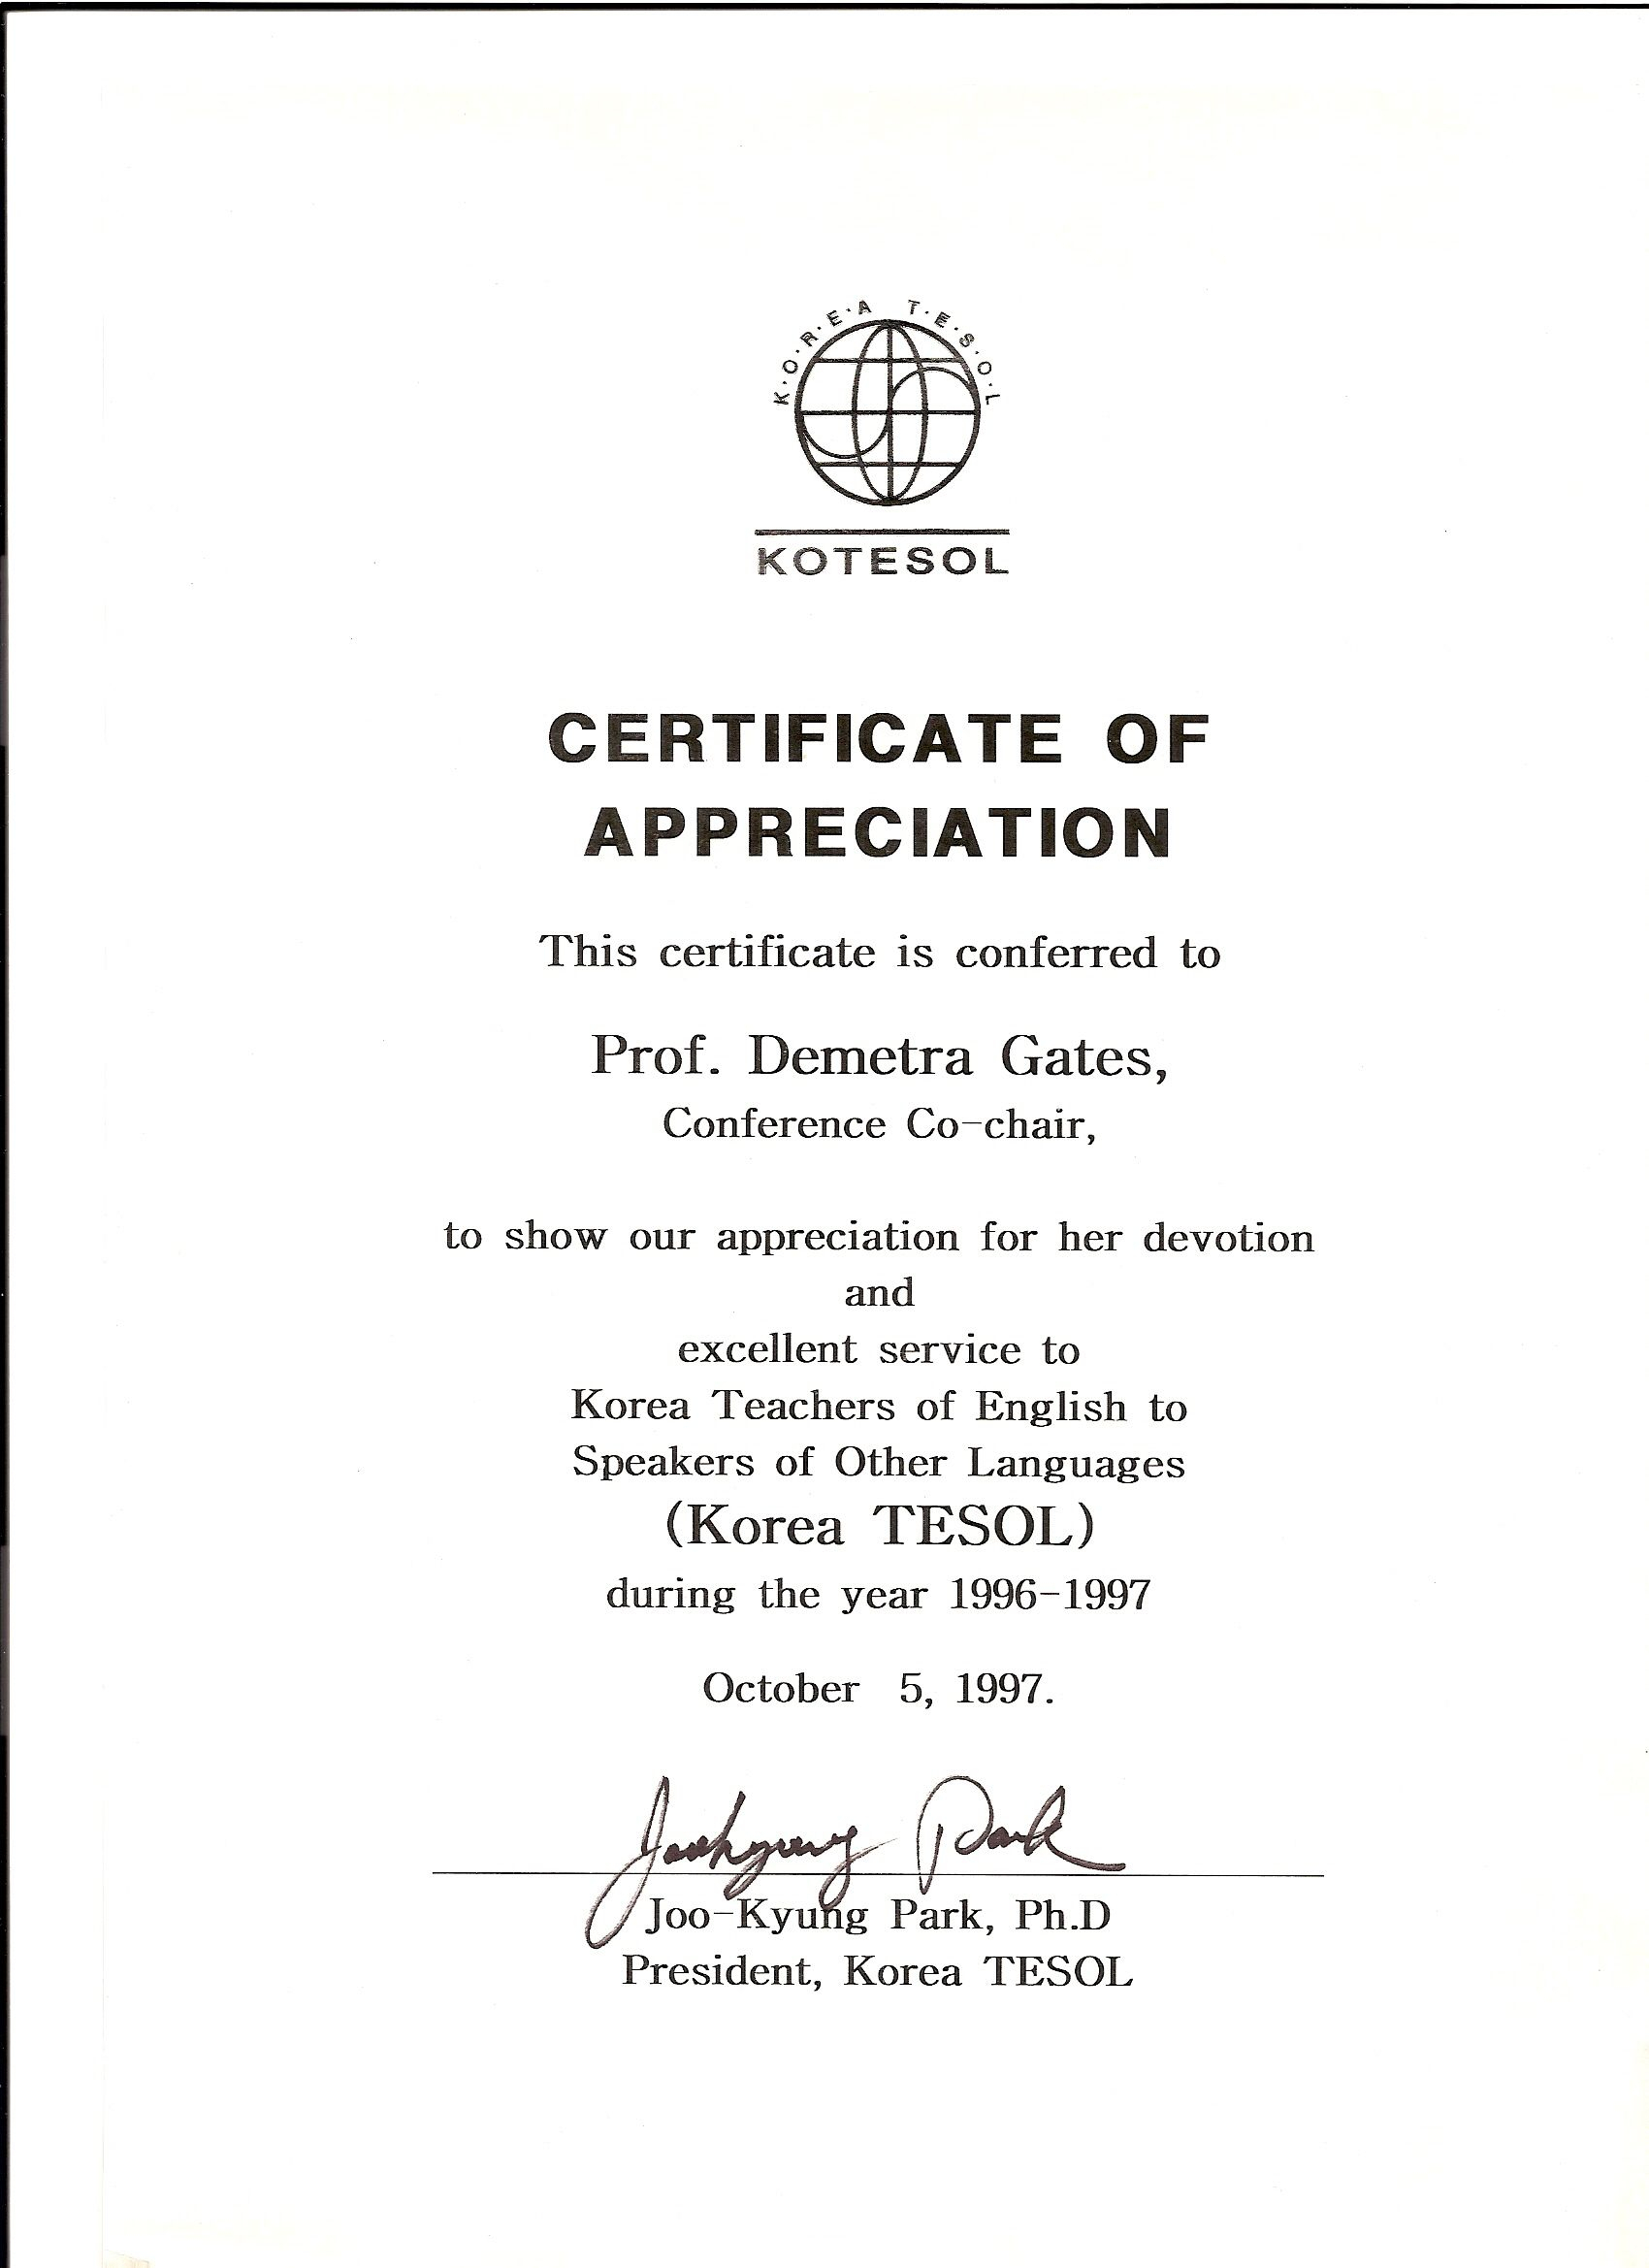 Kotesol Presidential Certificate Of Appreciation (1997 For University Graduation Certificate Template